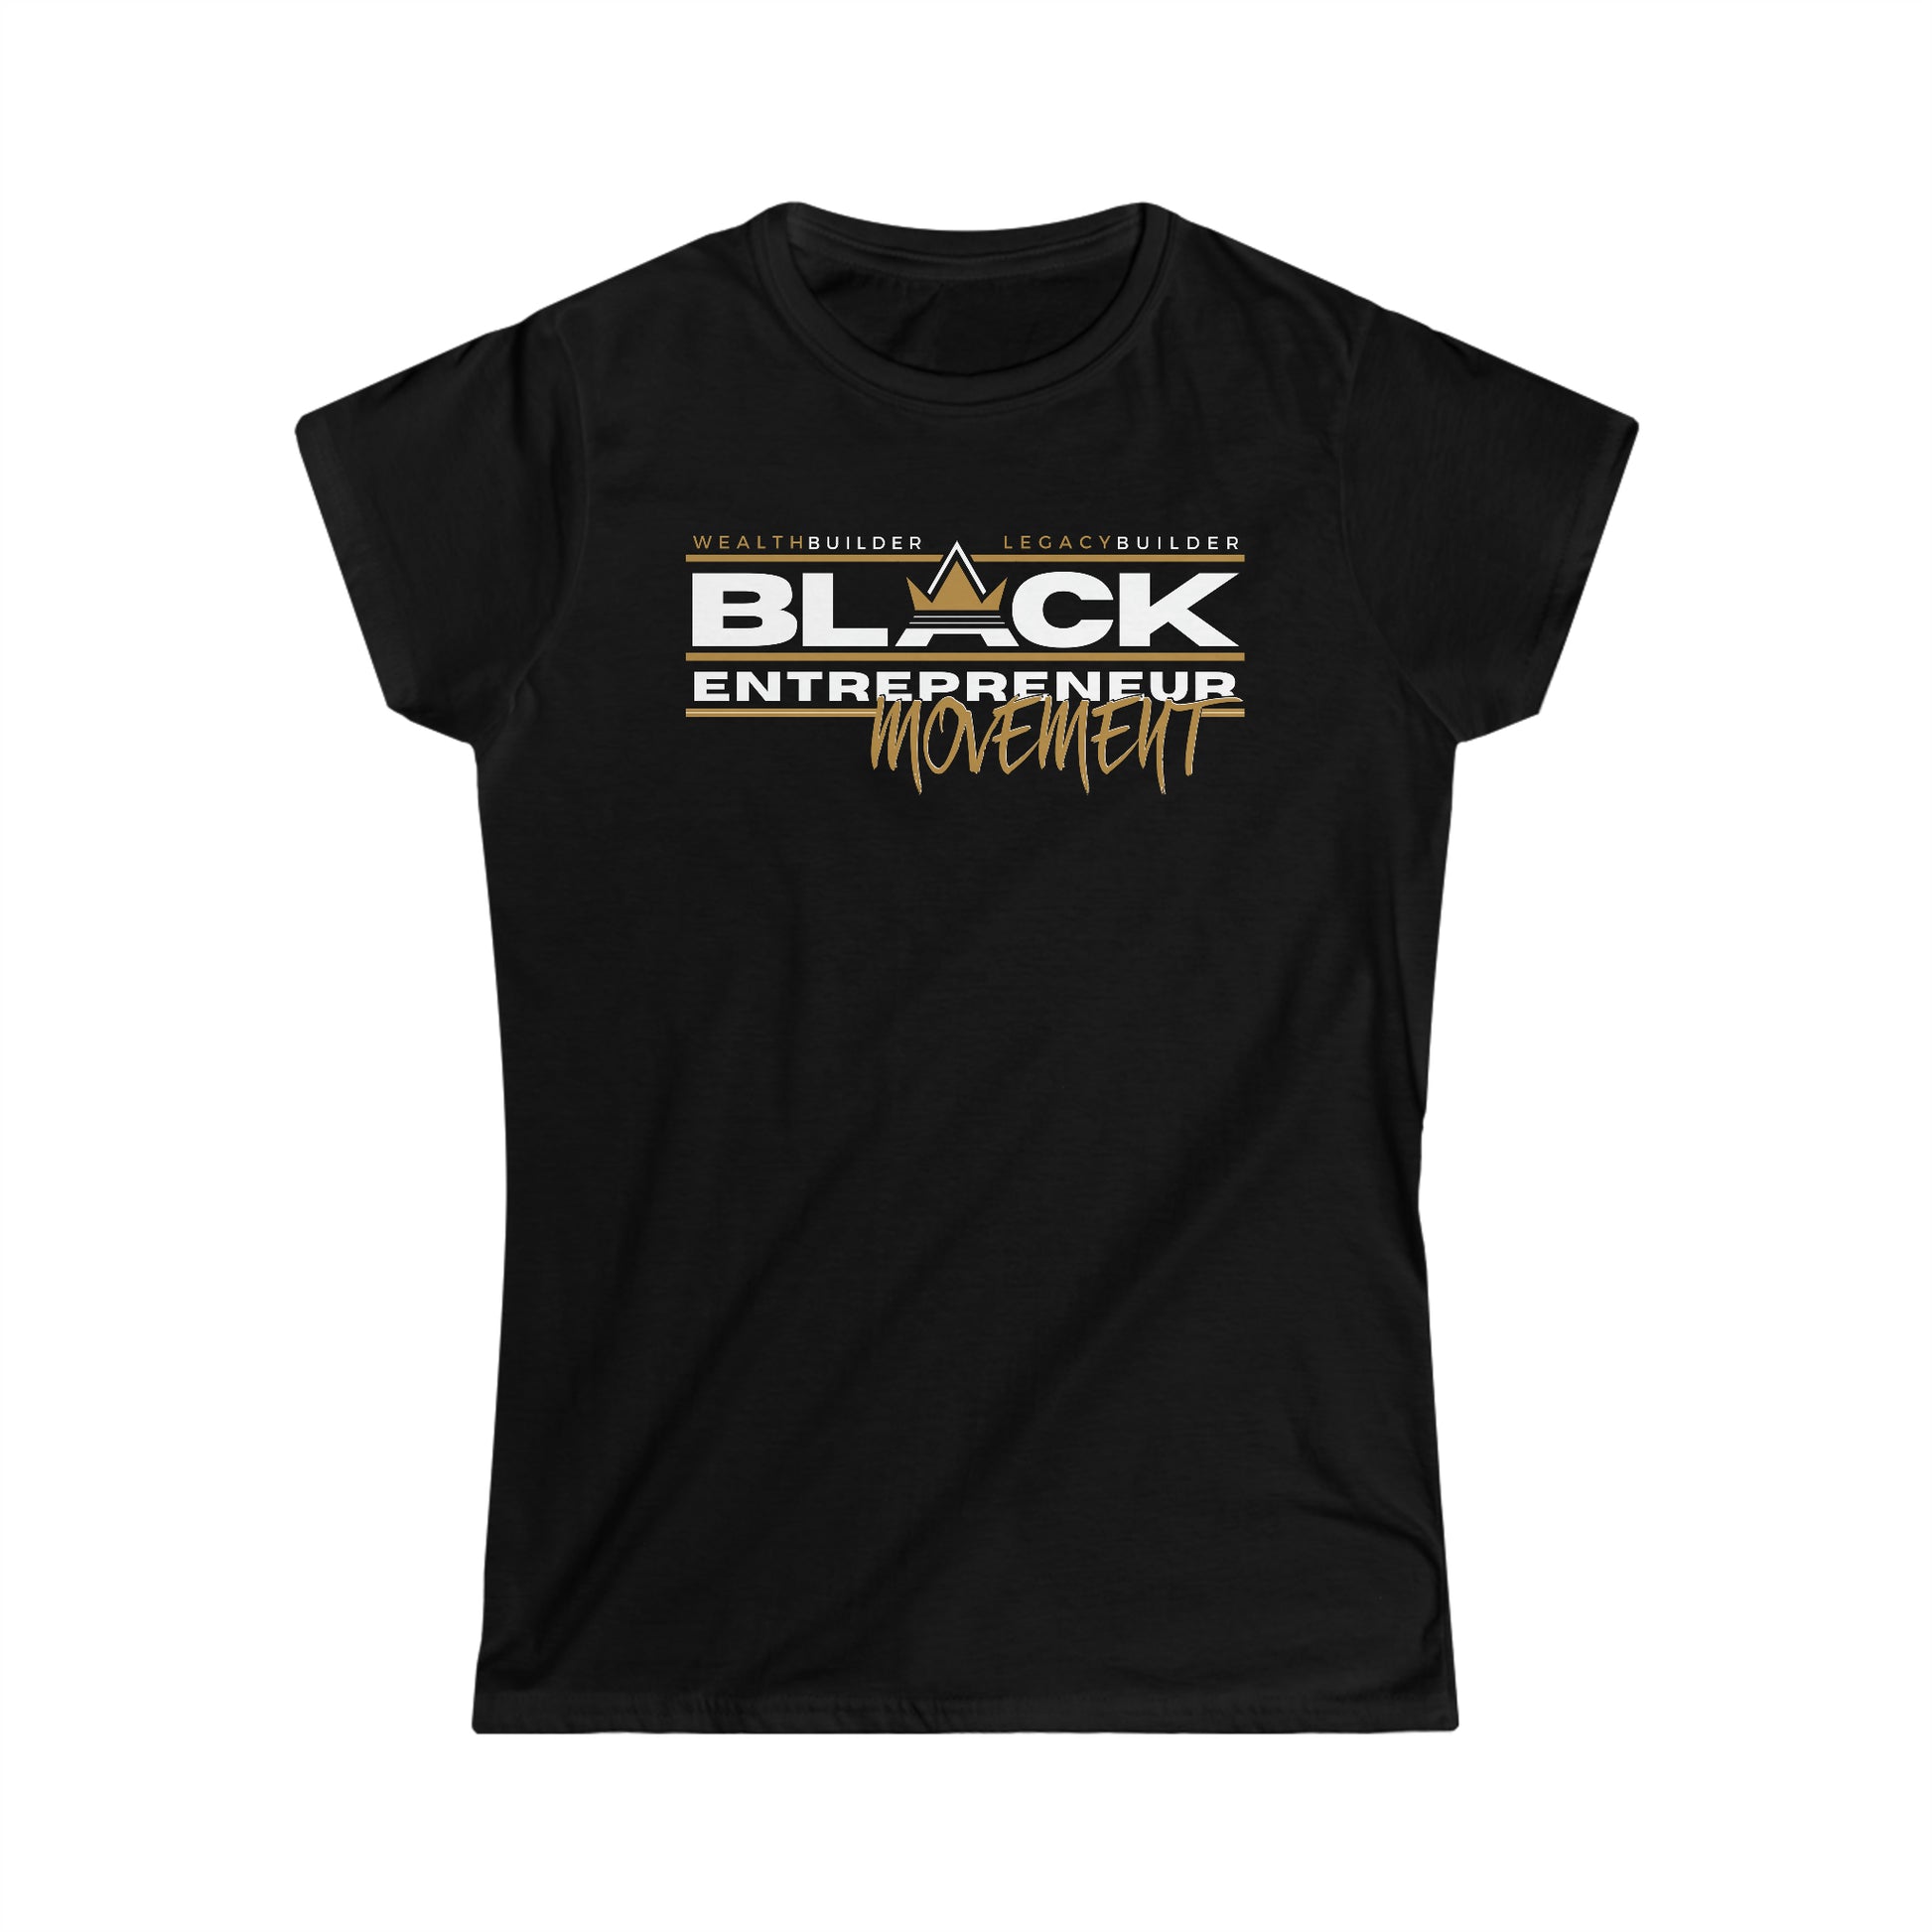 'Black Entrepreneur Movement' Women's Short Sleeve T-Shirt L Gold Crown